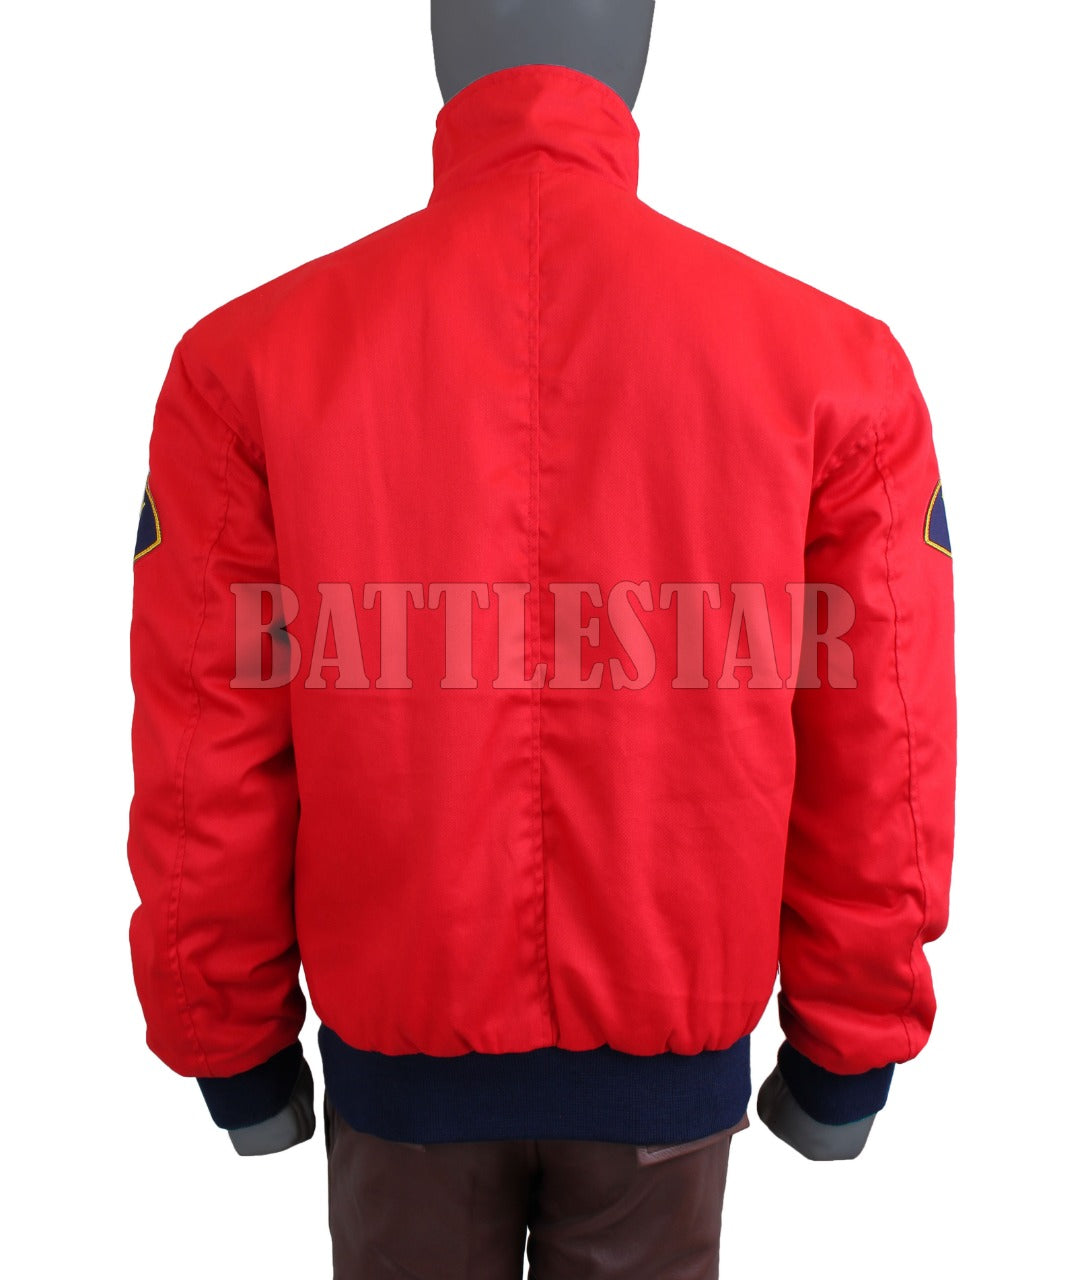 David Hasselhoff Baywatch Red Cotton Trendy  Jacket - Battlestar Clothing & Gears Co